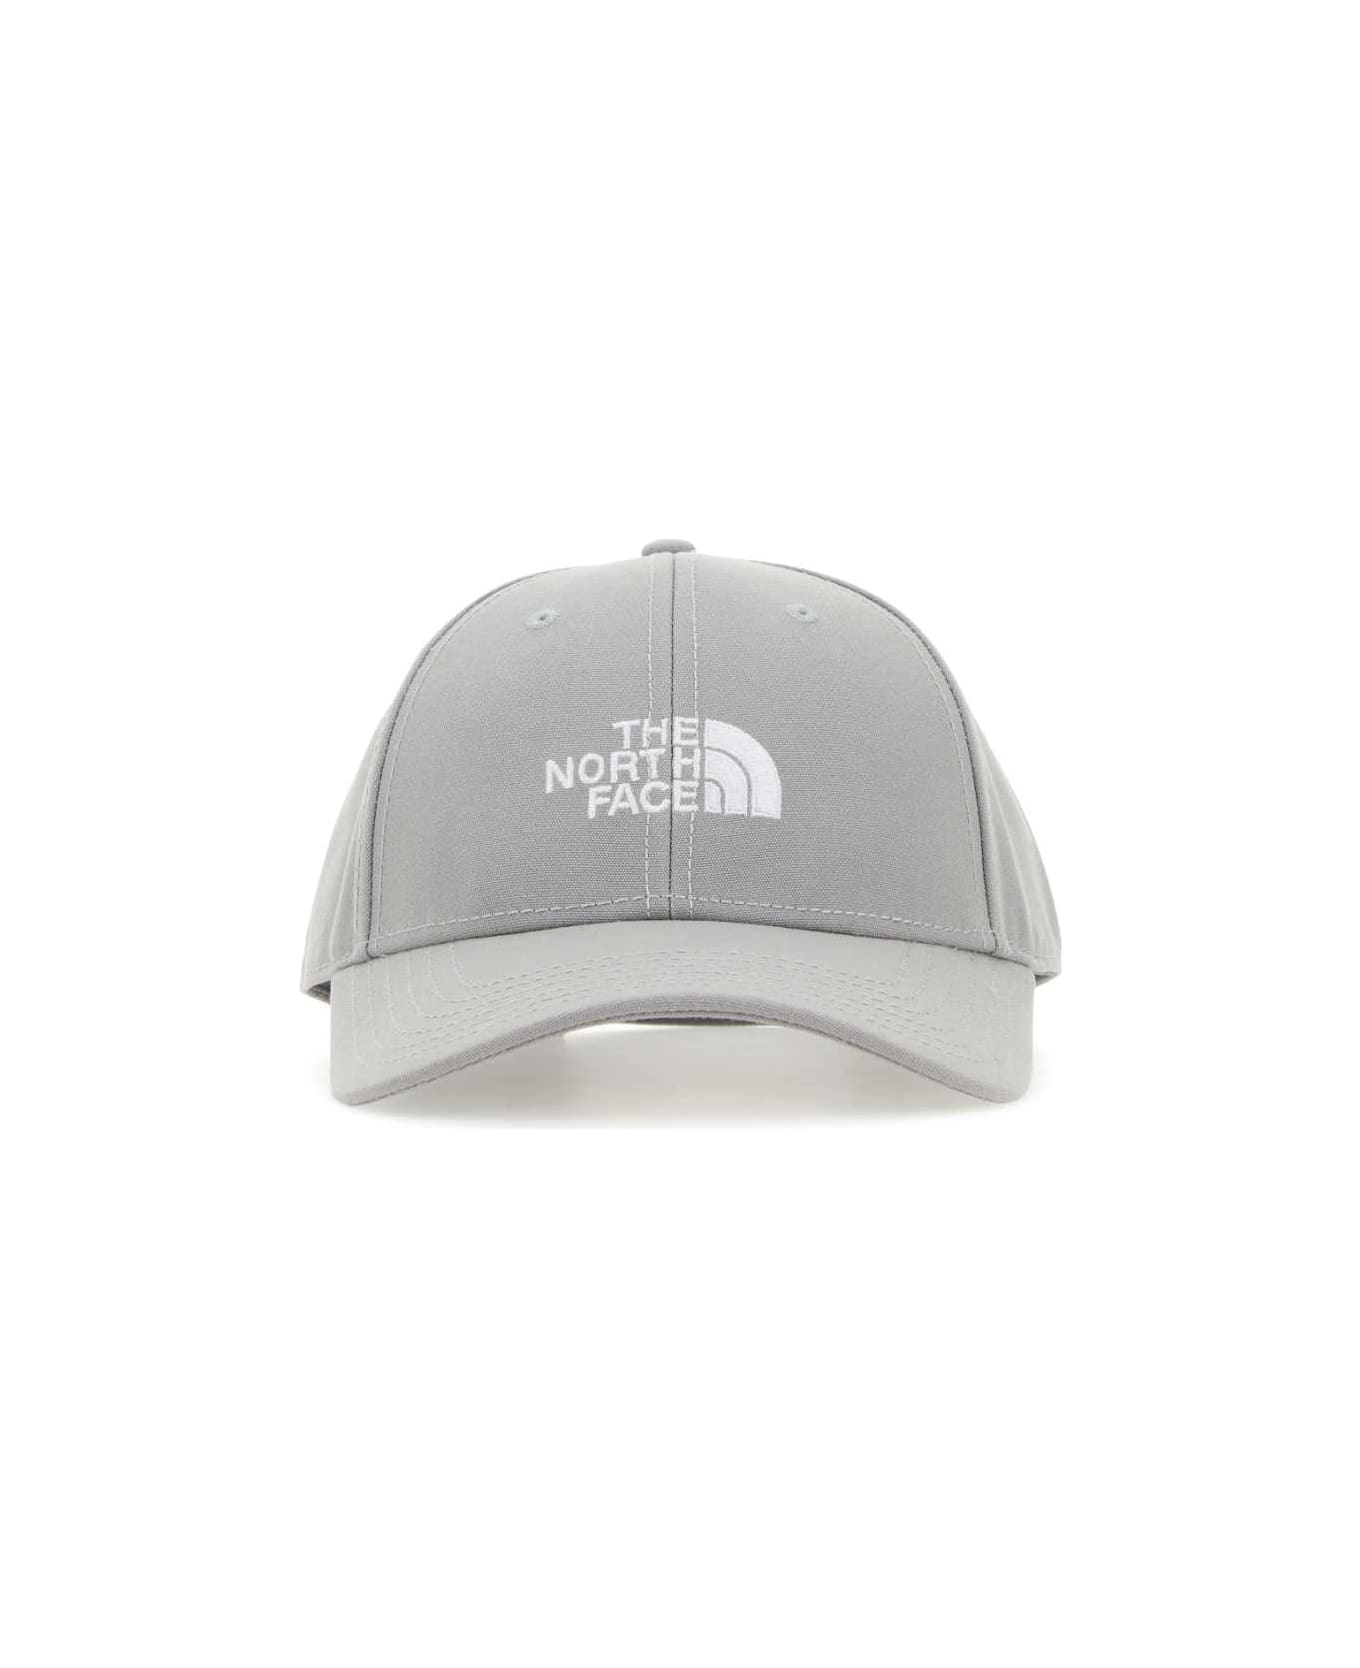 The North Face Grey Polyester Baseball Cap - MELD GREY